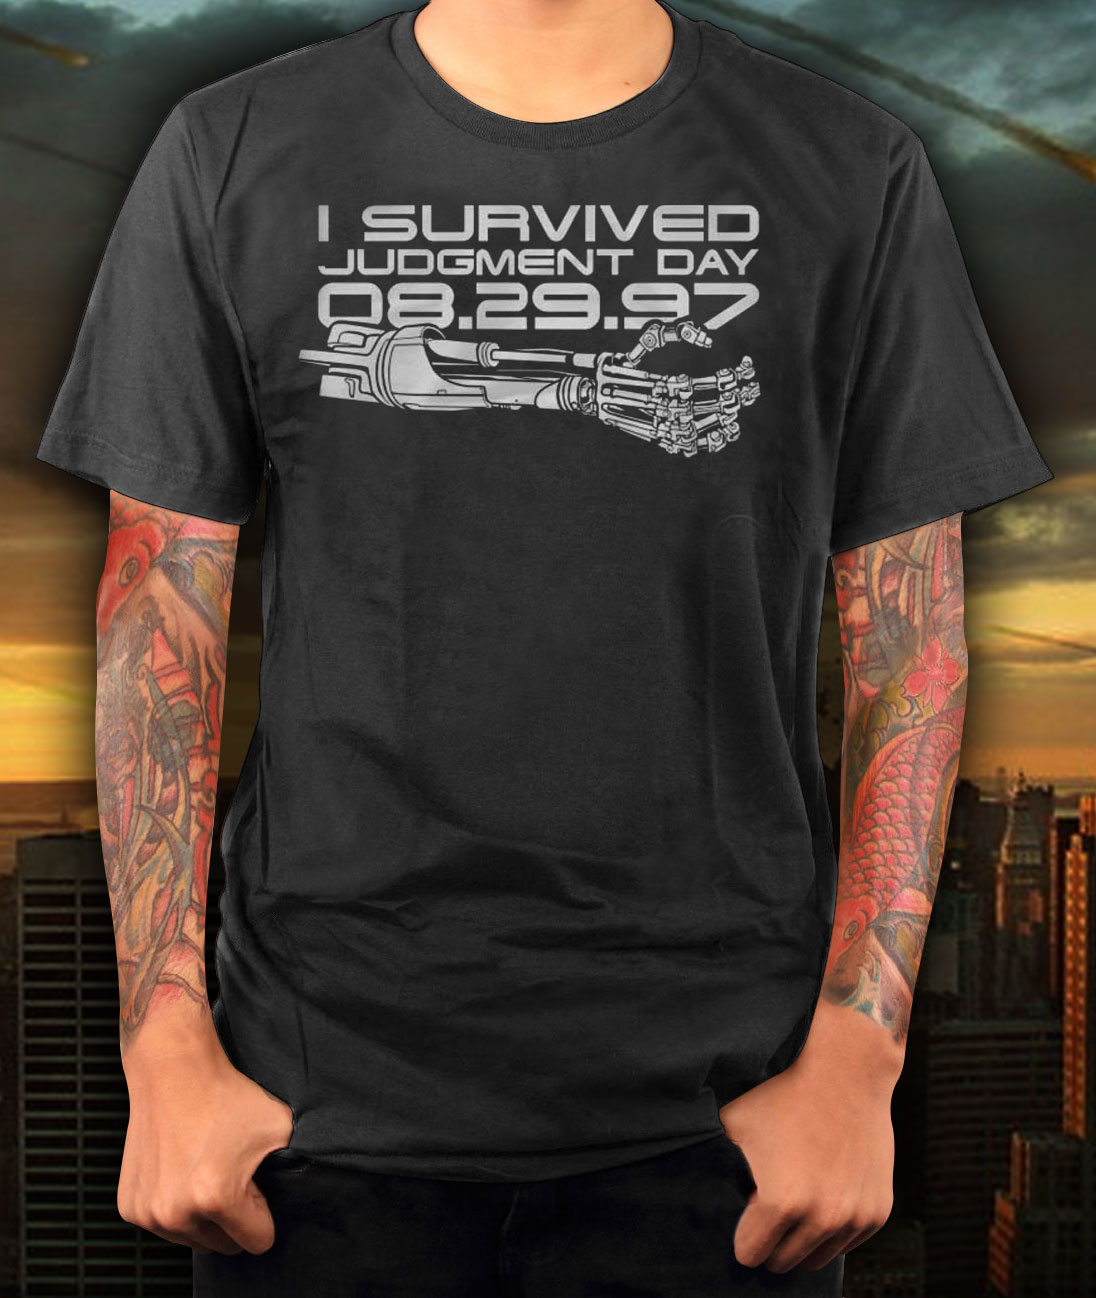 Terminator T-800 Judgment Day Survivor T-Shirt